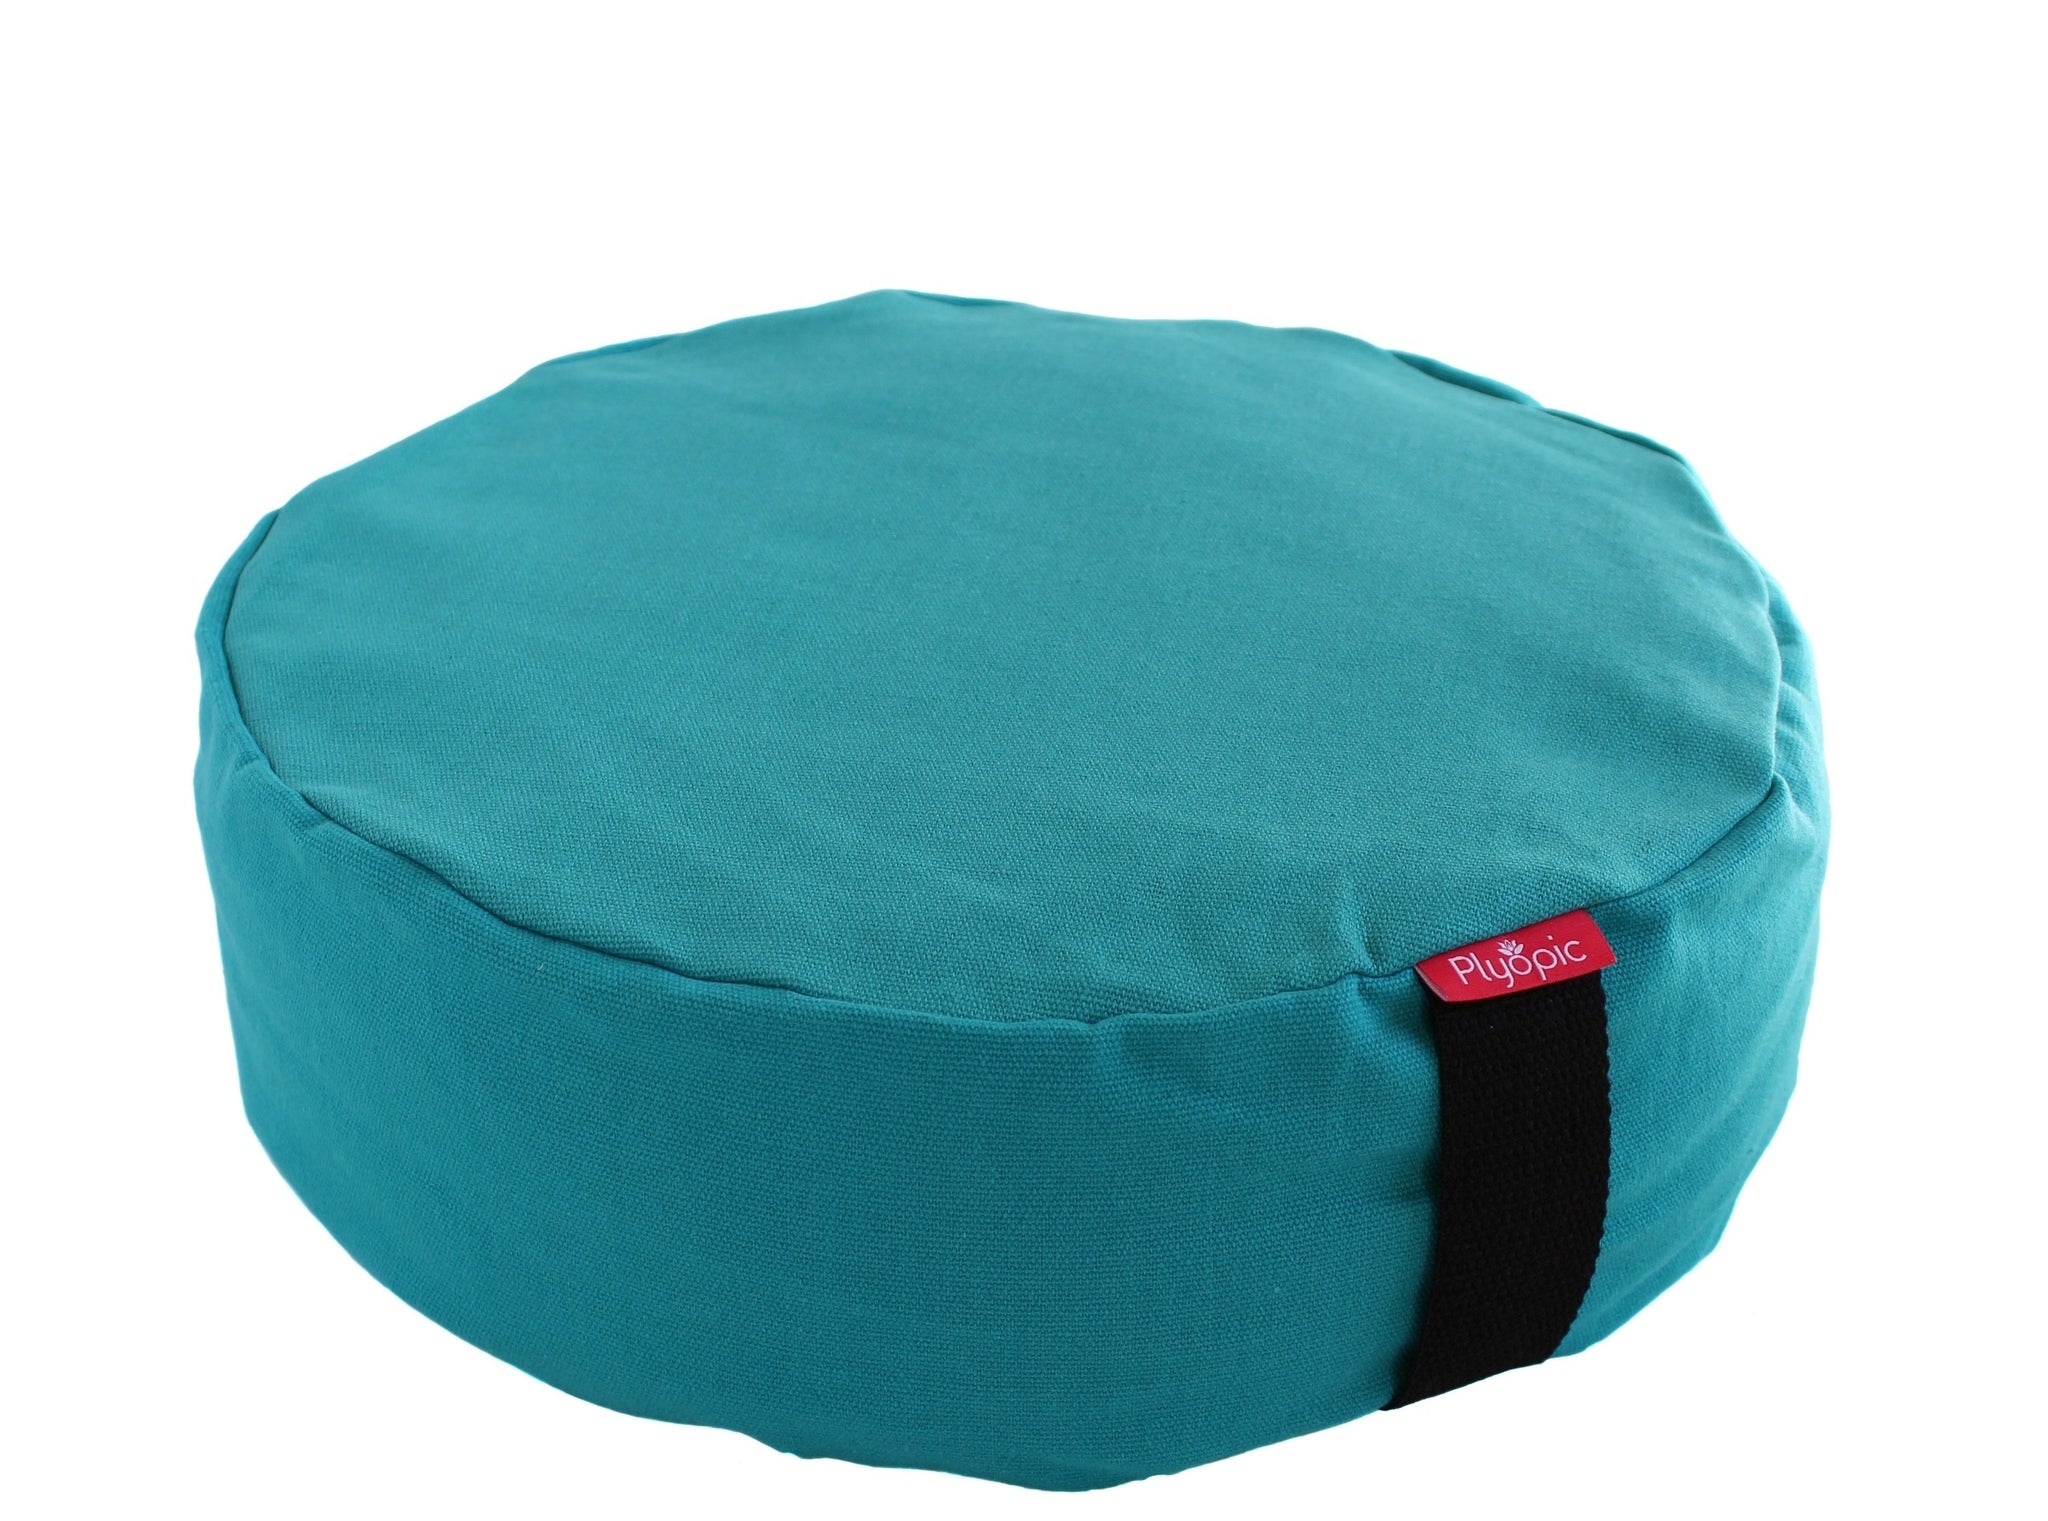 Plyopic-Zafu Meditation Cushion (Turquoise)-Meditation Cushion